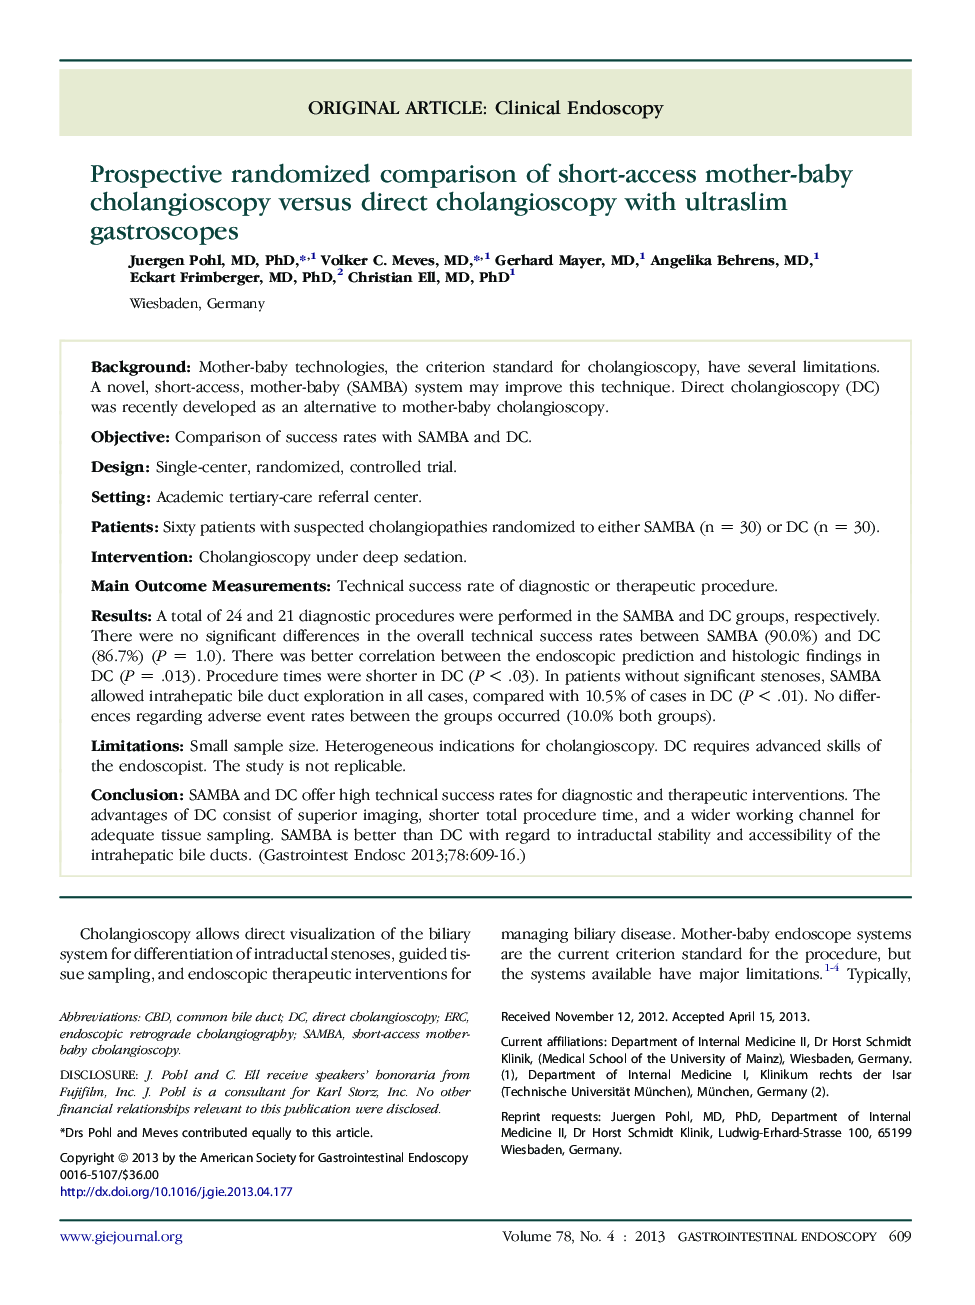 Prospective randomized comparison of short-access mother-baby cholangioscopy versus direct cholangioscopy with ultraslim gastroscopes 